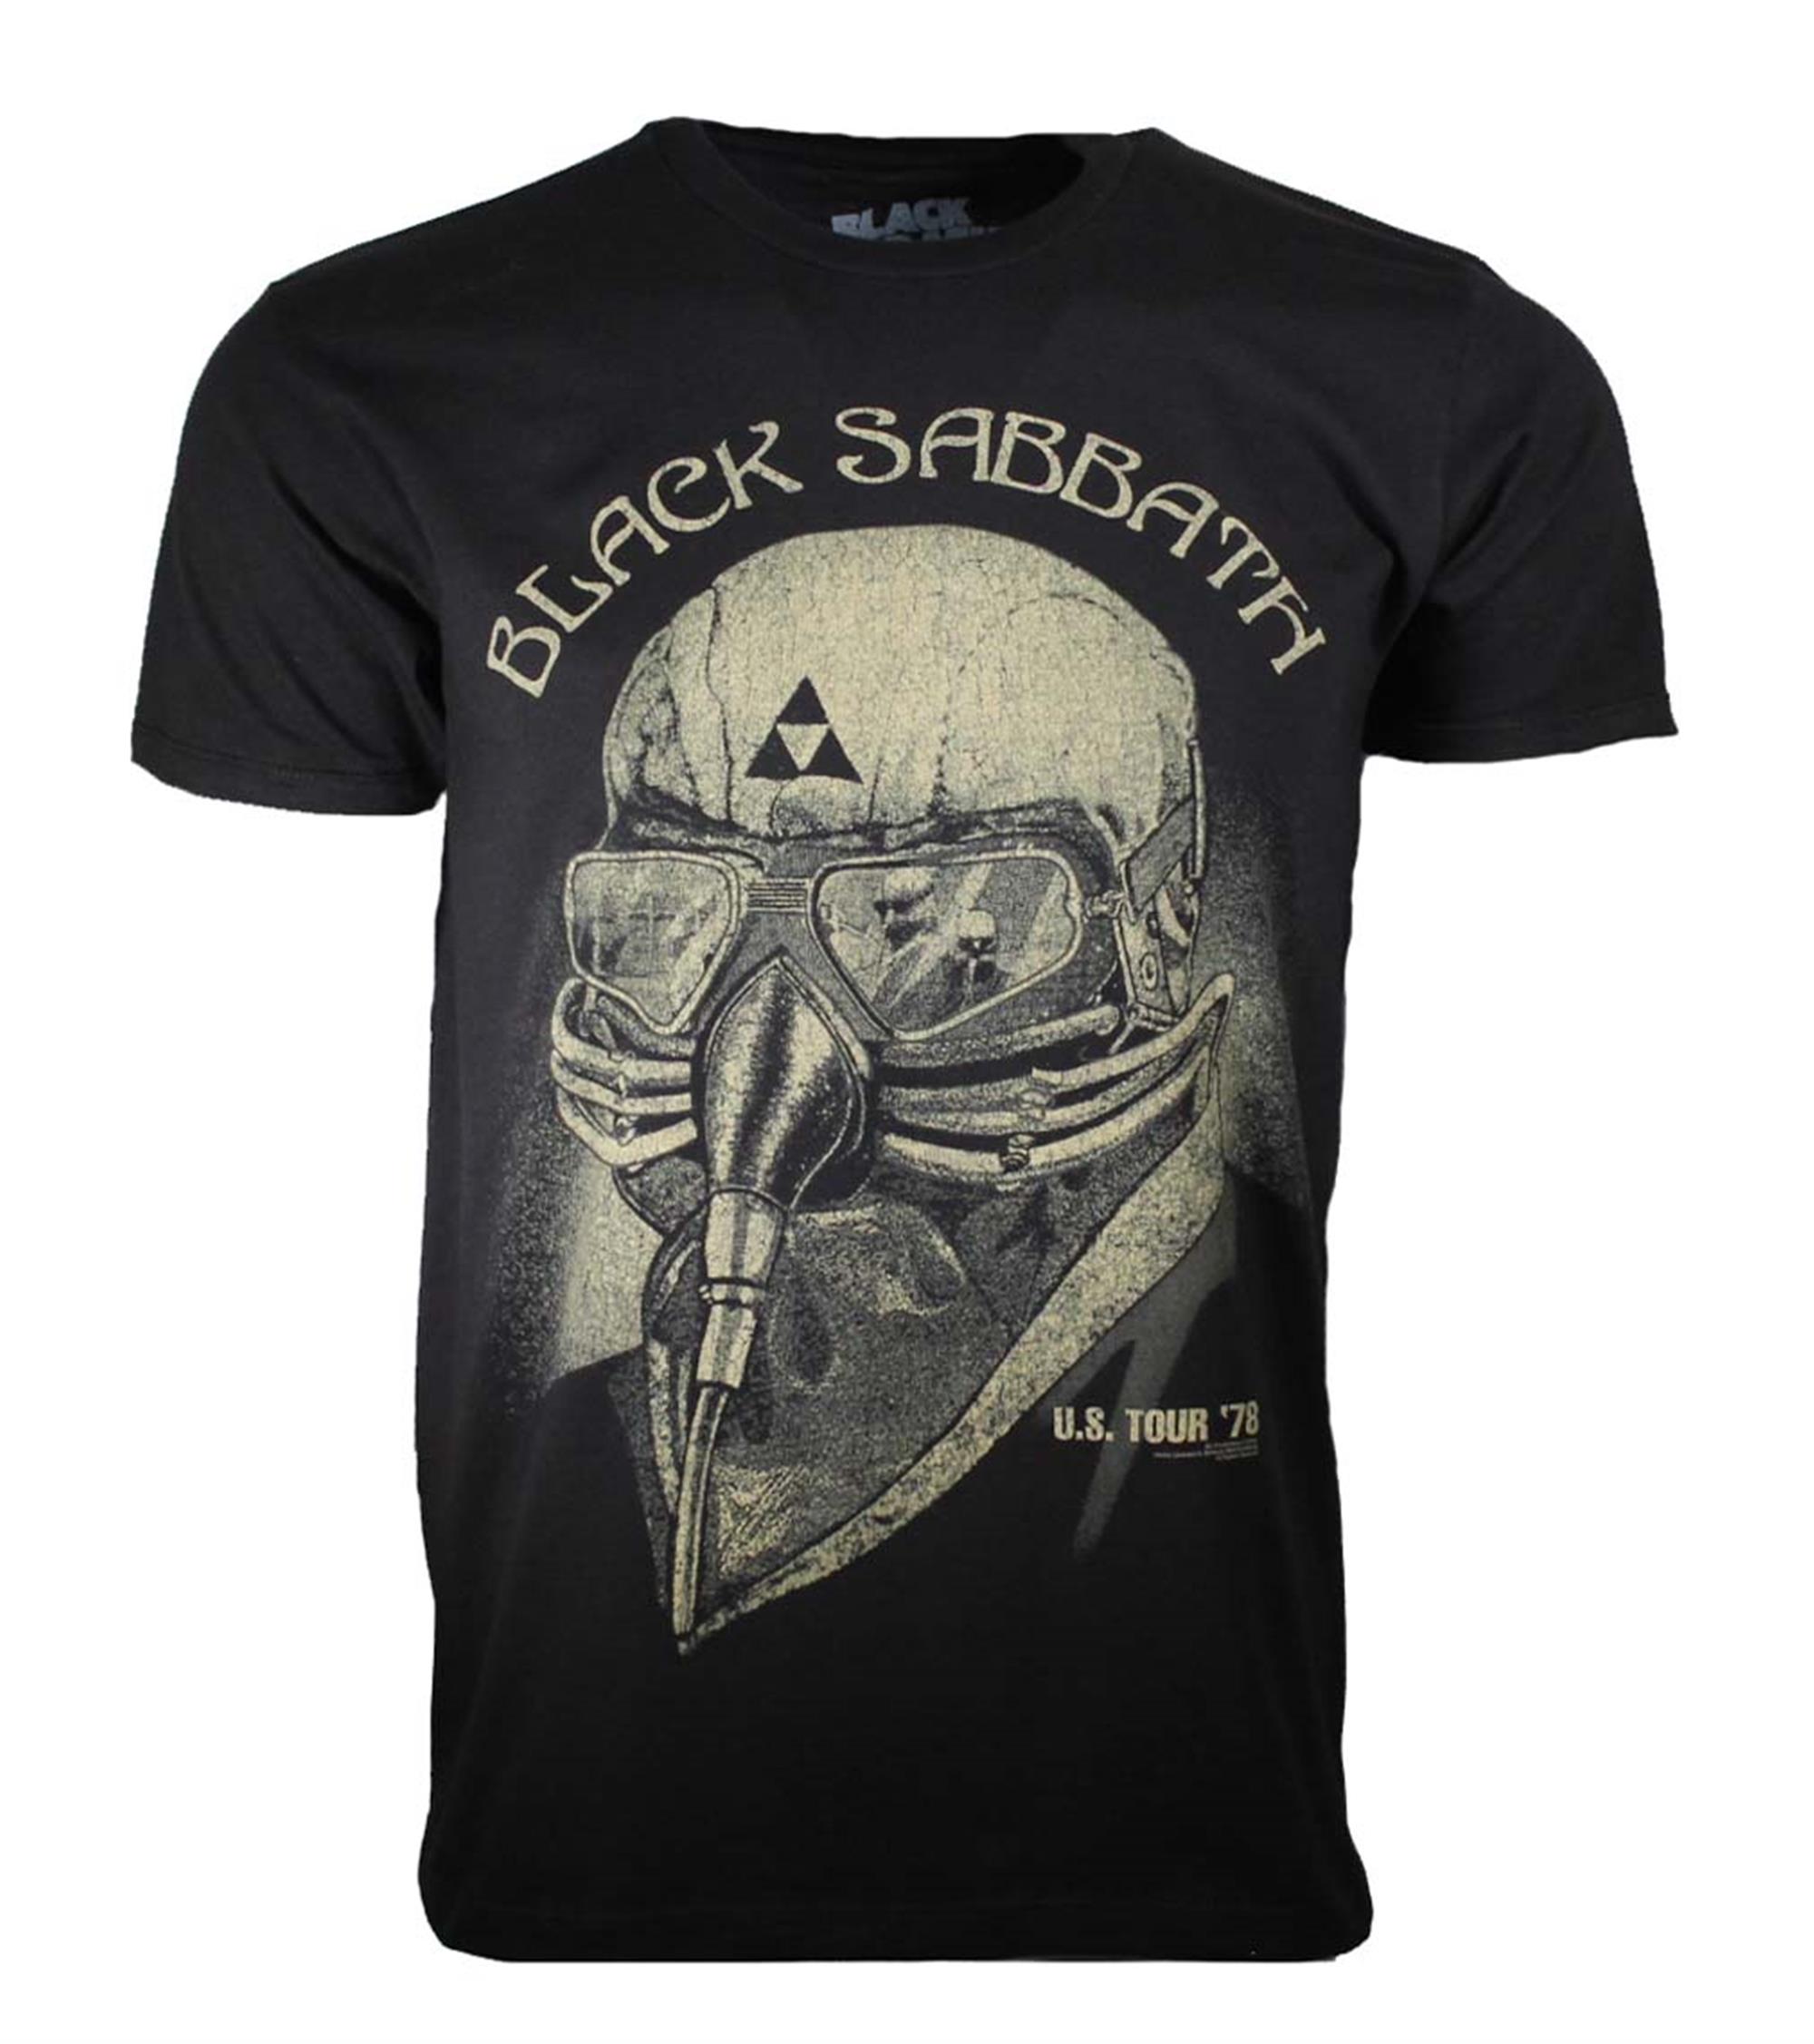 Black Sabbath U.S. Tour '78 T-Shirt